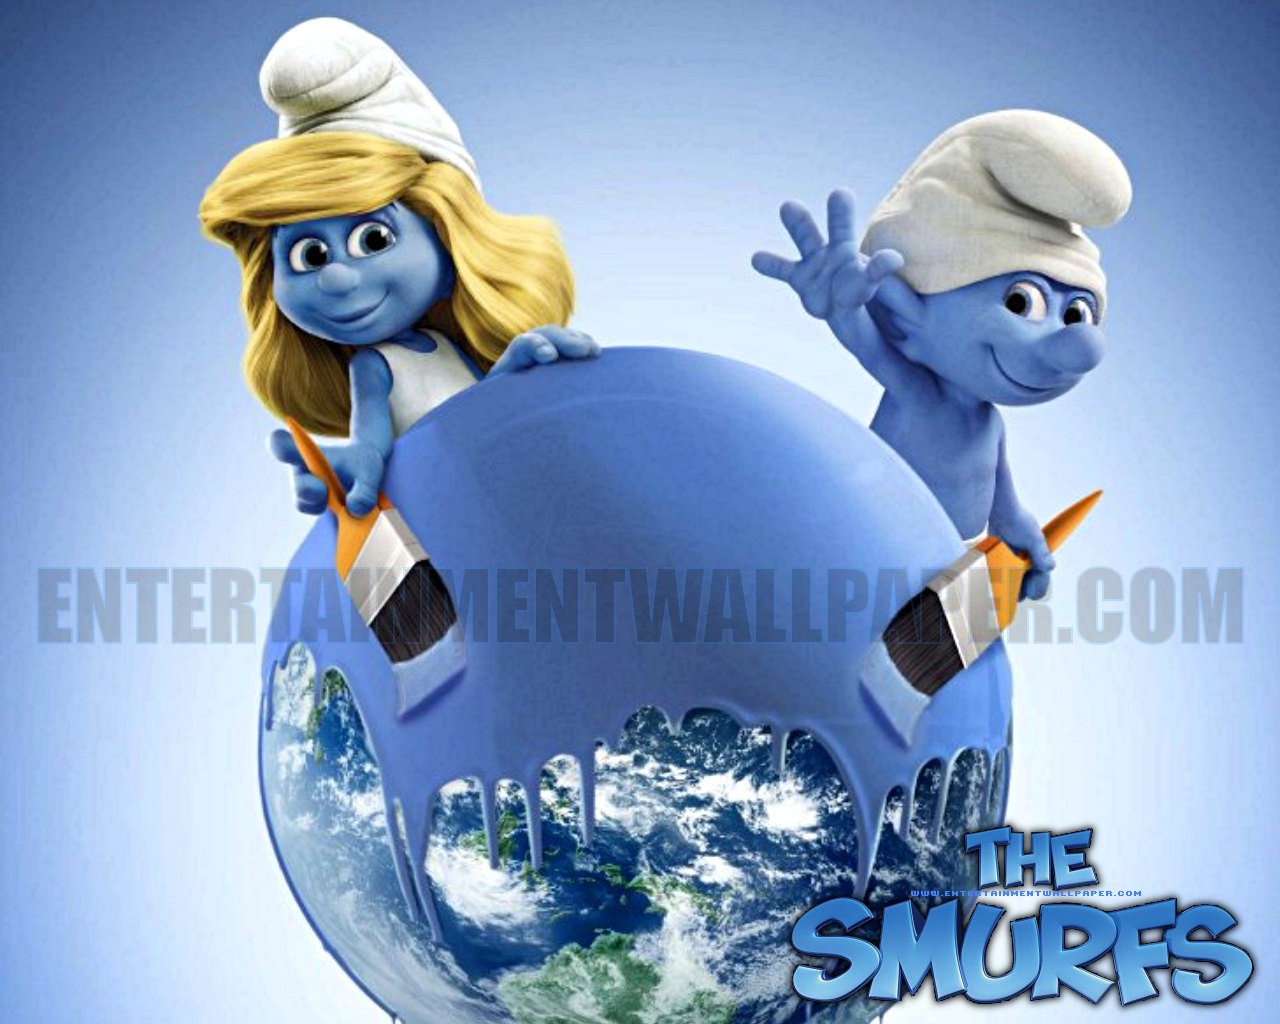 The Smurfs 3D Movie wallpaper 06 - 1280x960 wallpaper download -